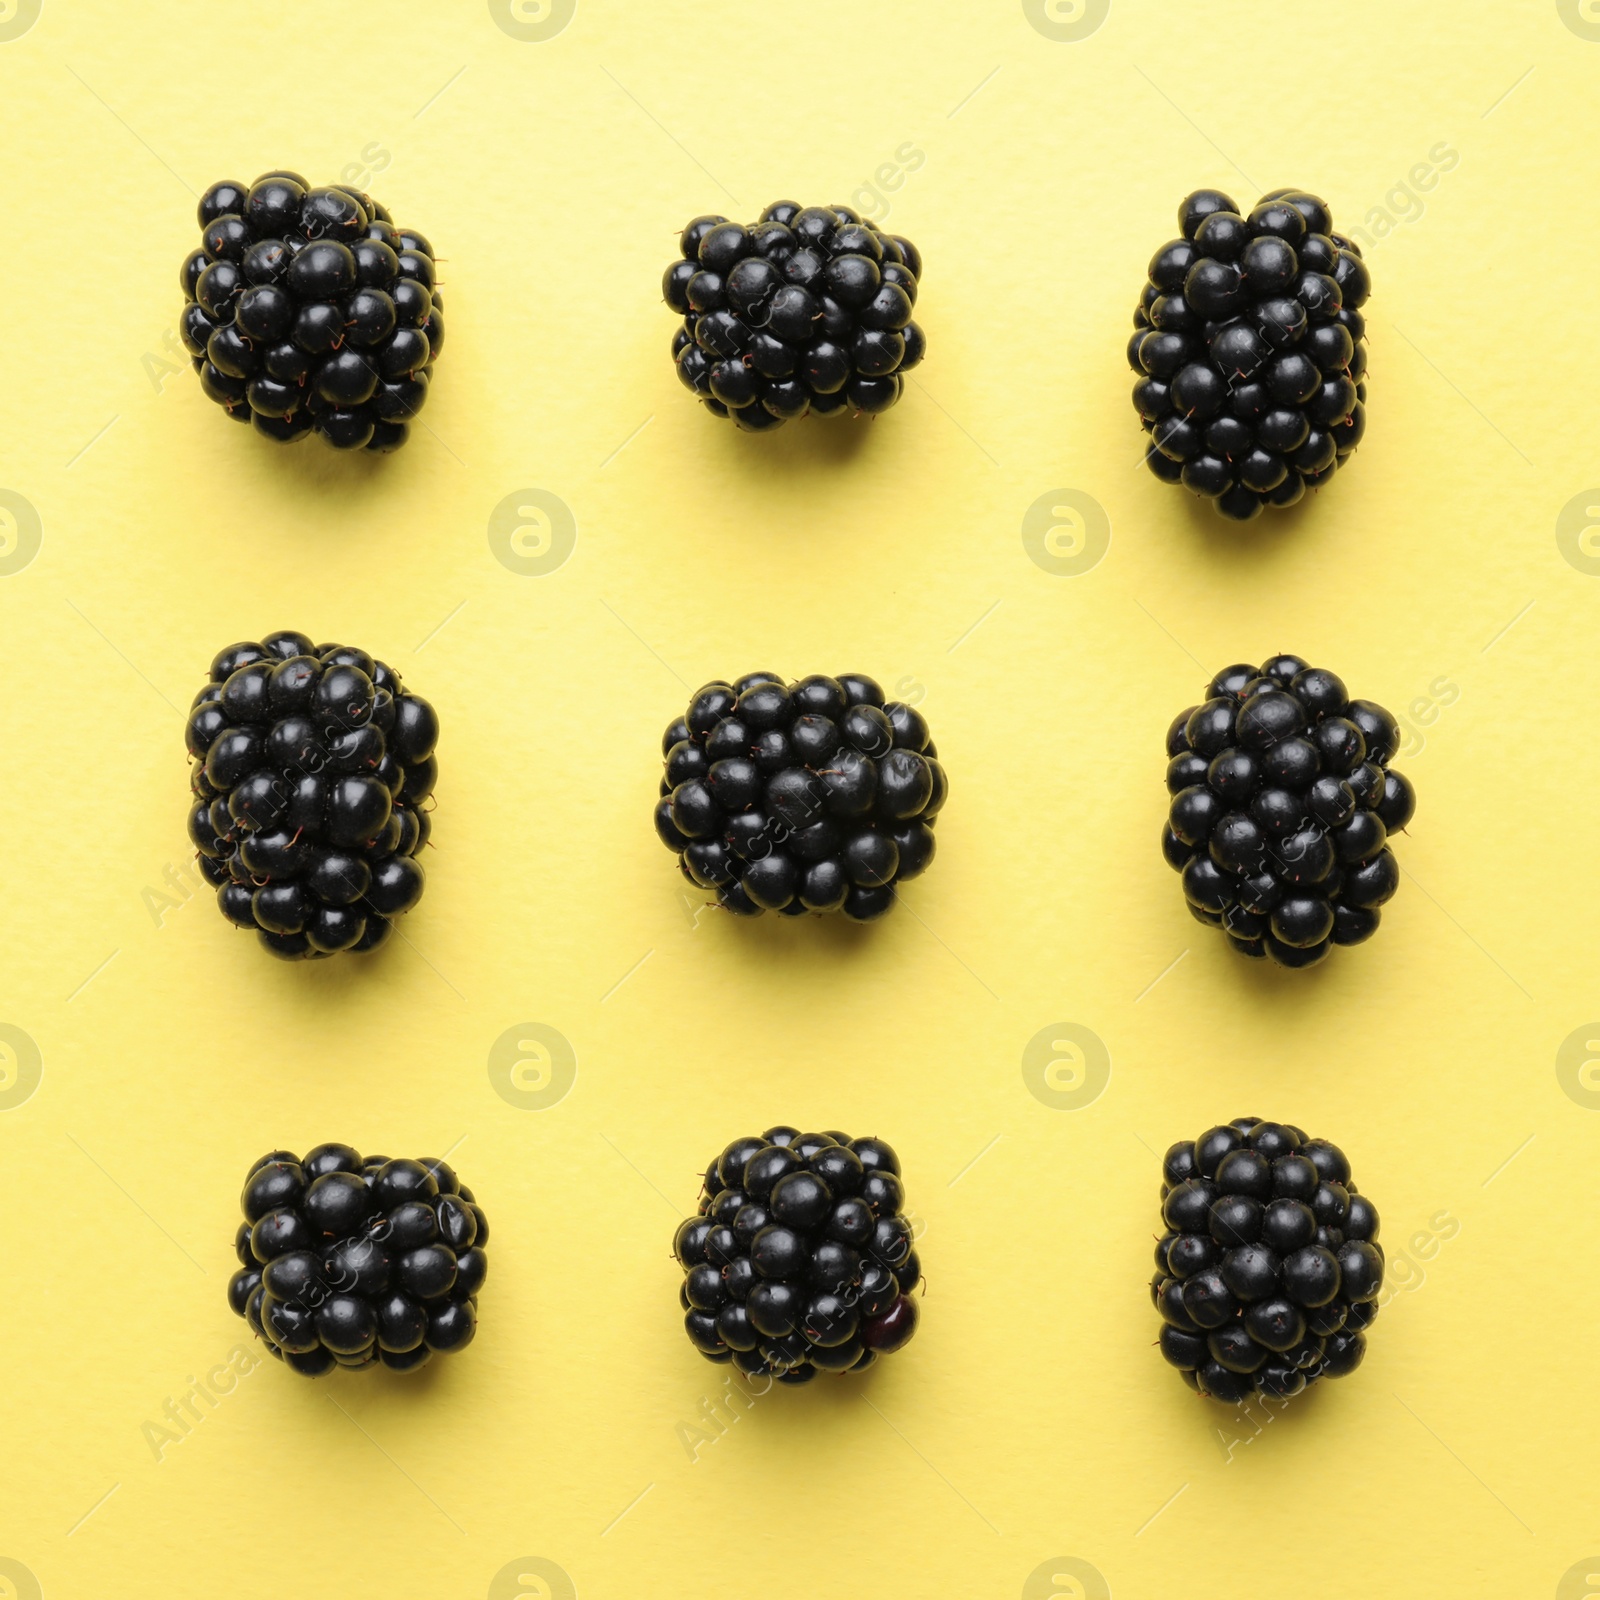 Photo of Tasty ripe blackberries on yellow background, flat lay